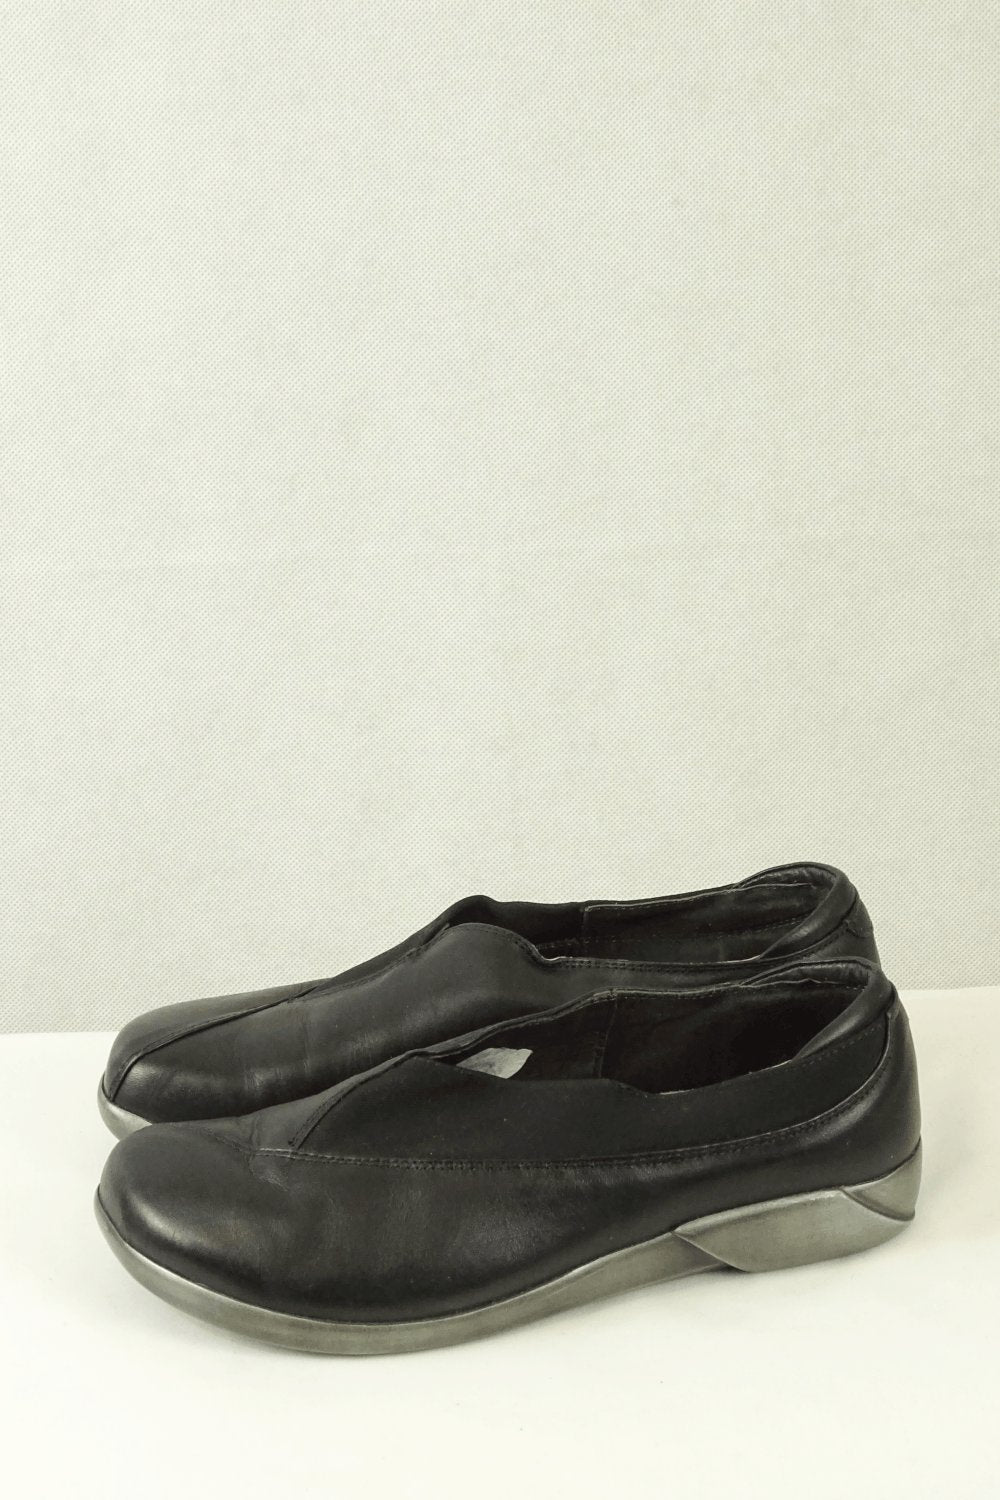 Naot Black Shoes 37